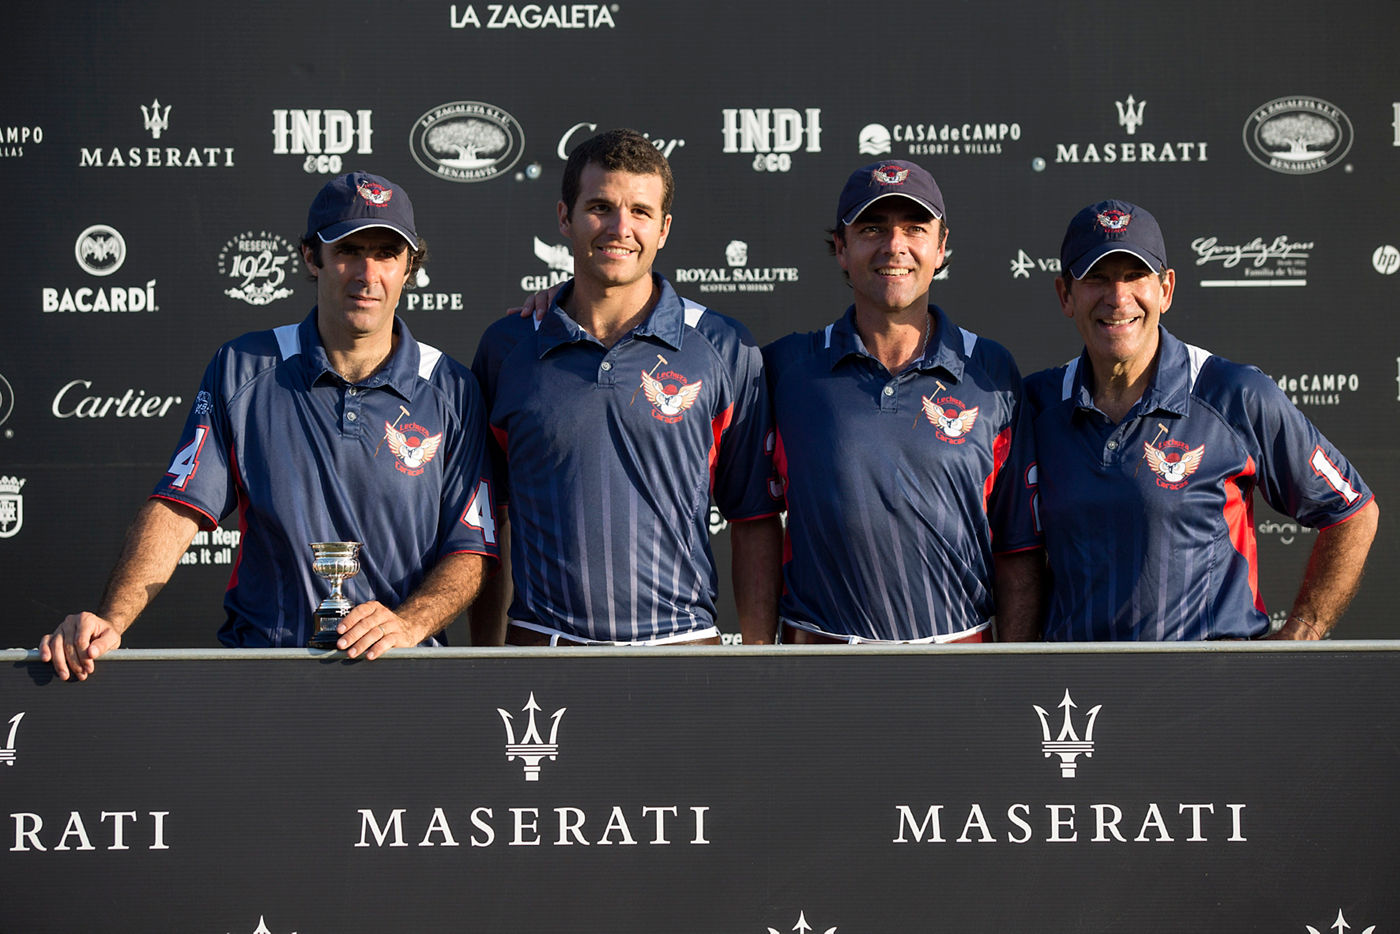 45' Torneo Internacional de Polo Sotogrande (18) - Maserati Broze Cup Final - Lechuza Caracas Team